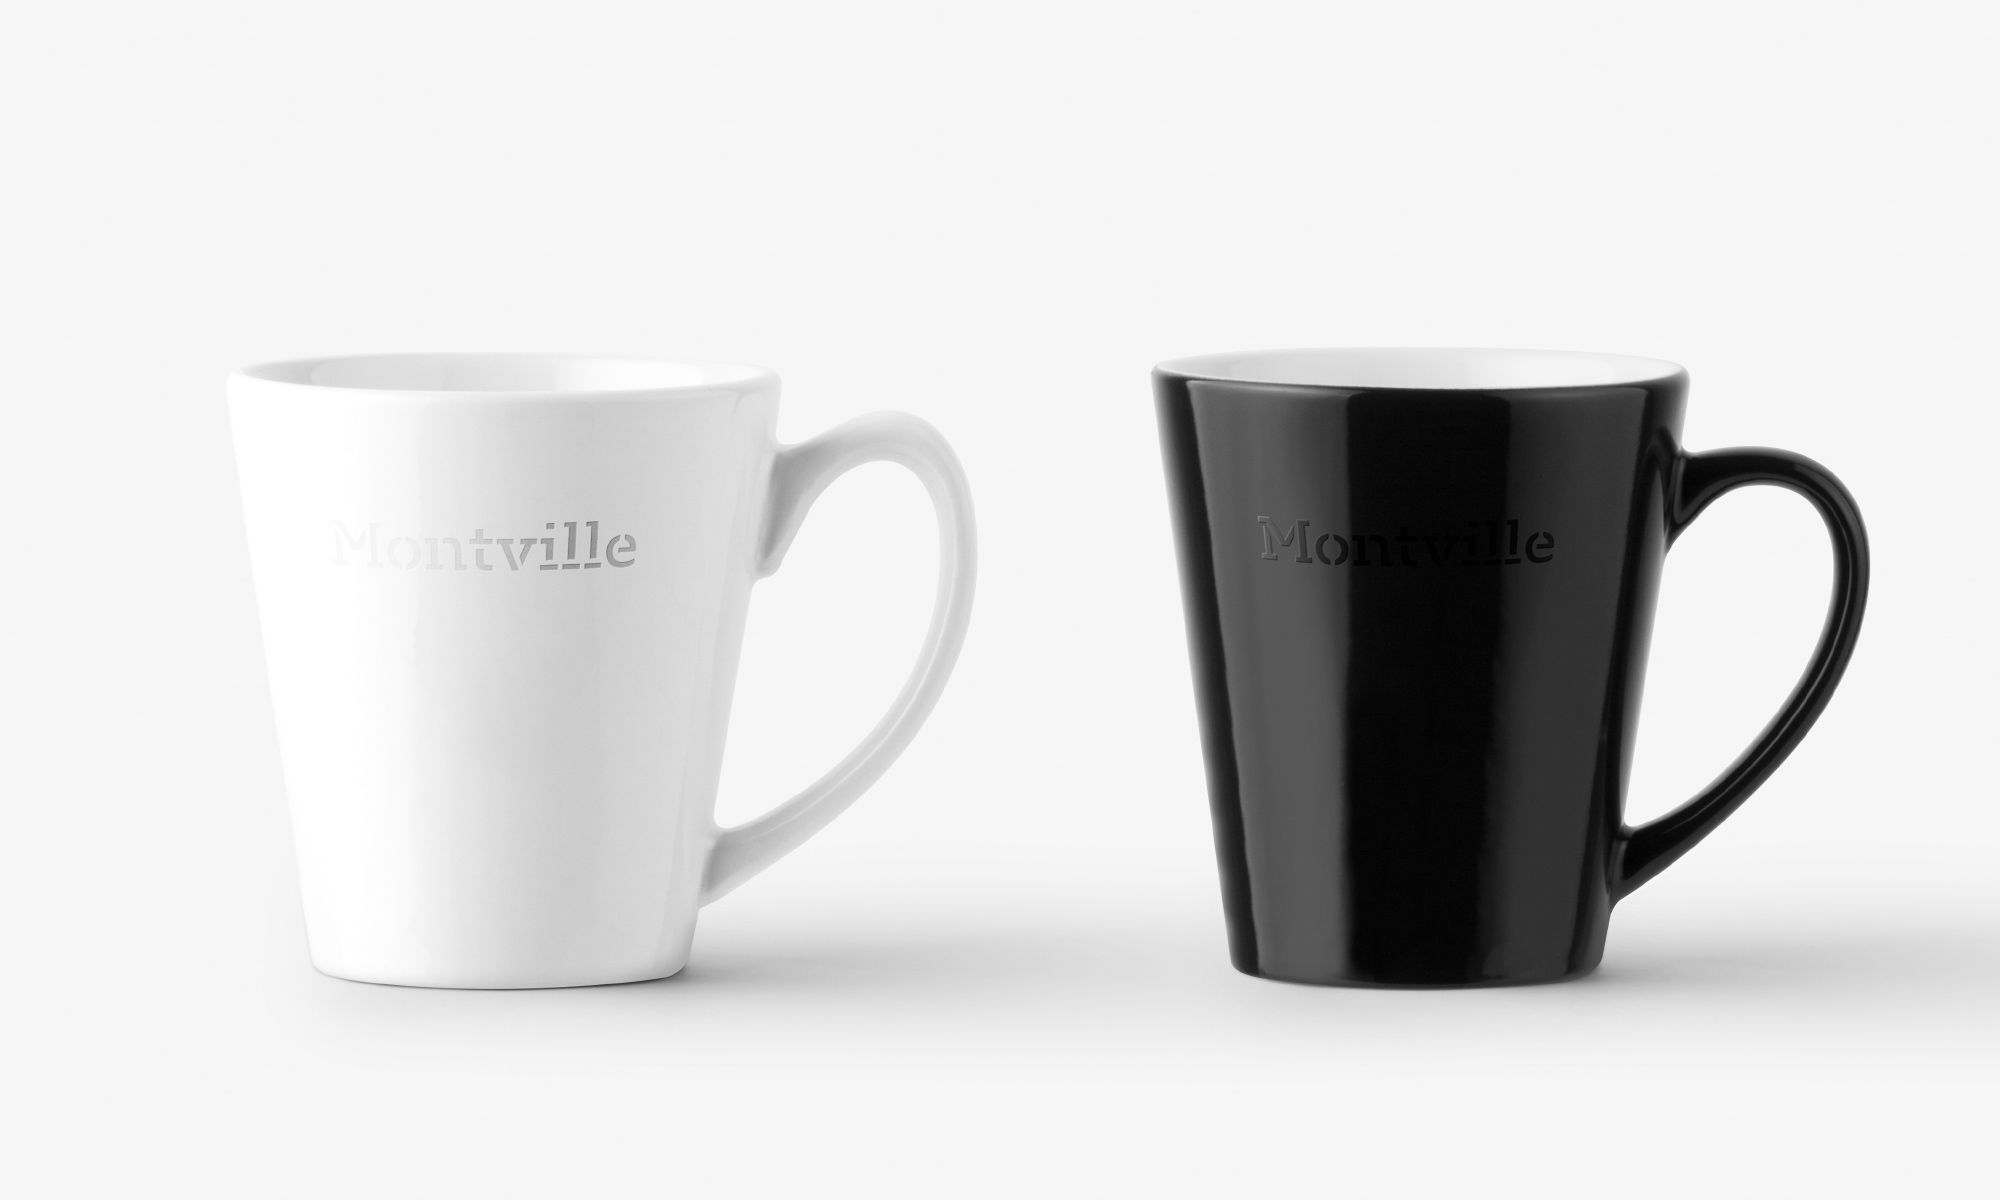 Montville Coffee mugs